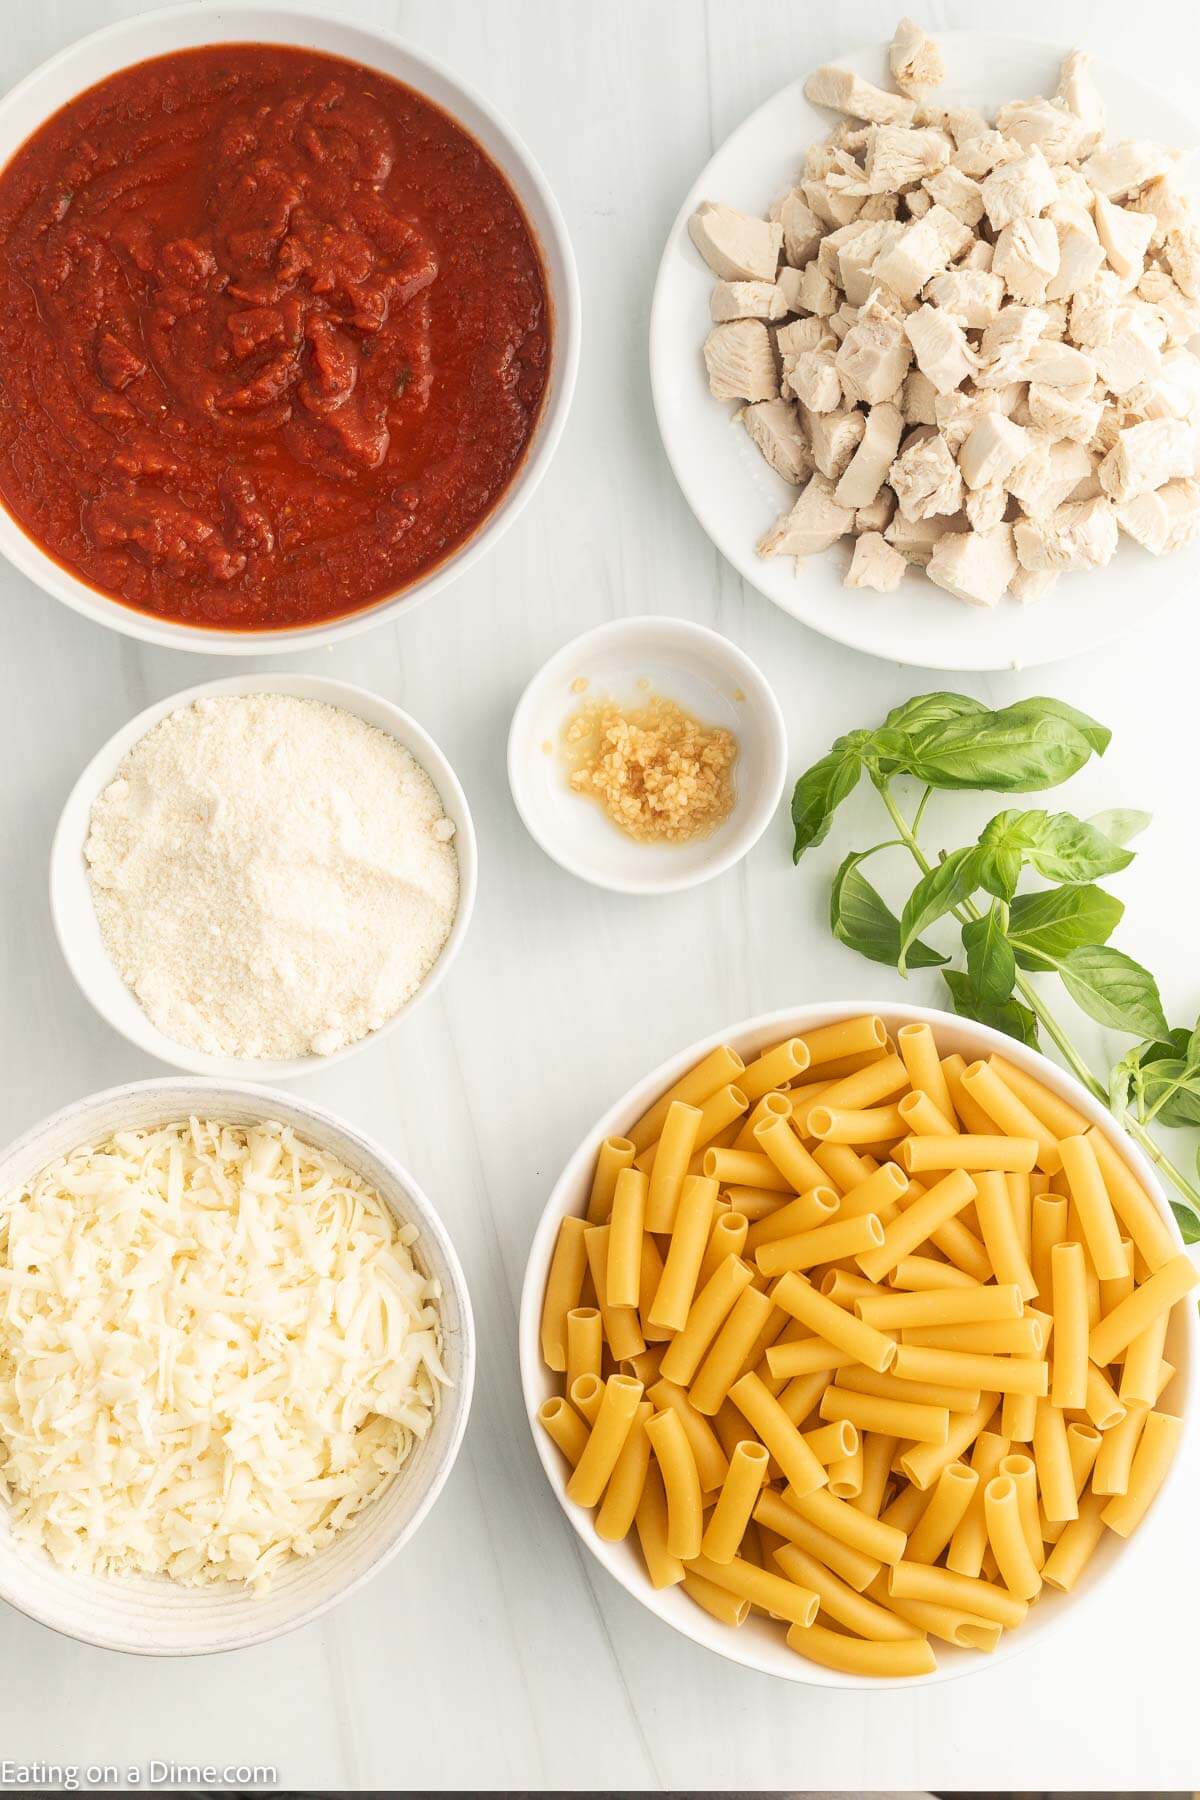 Ingredients needed - chicken, ziti noodles, garlic, pasta sauce, basil, parmesan cheese, mozzarella cheese